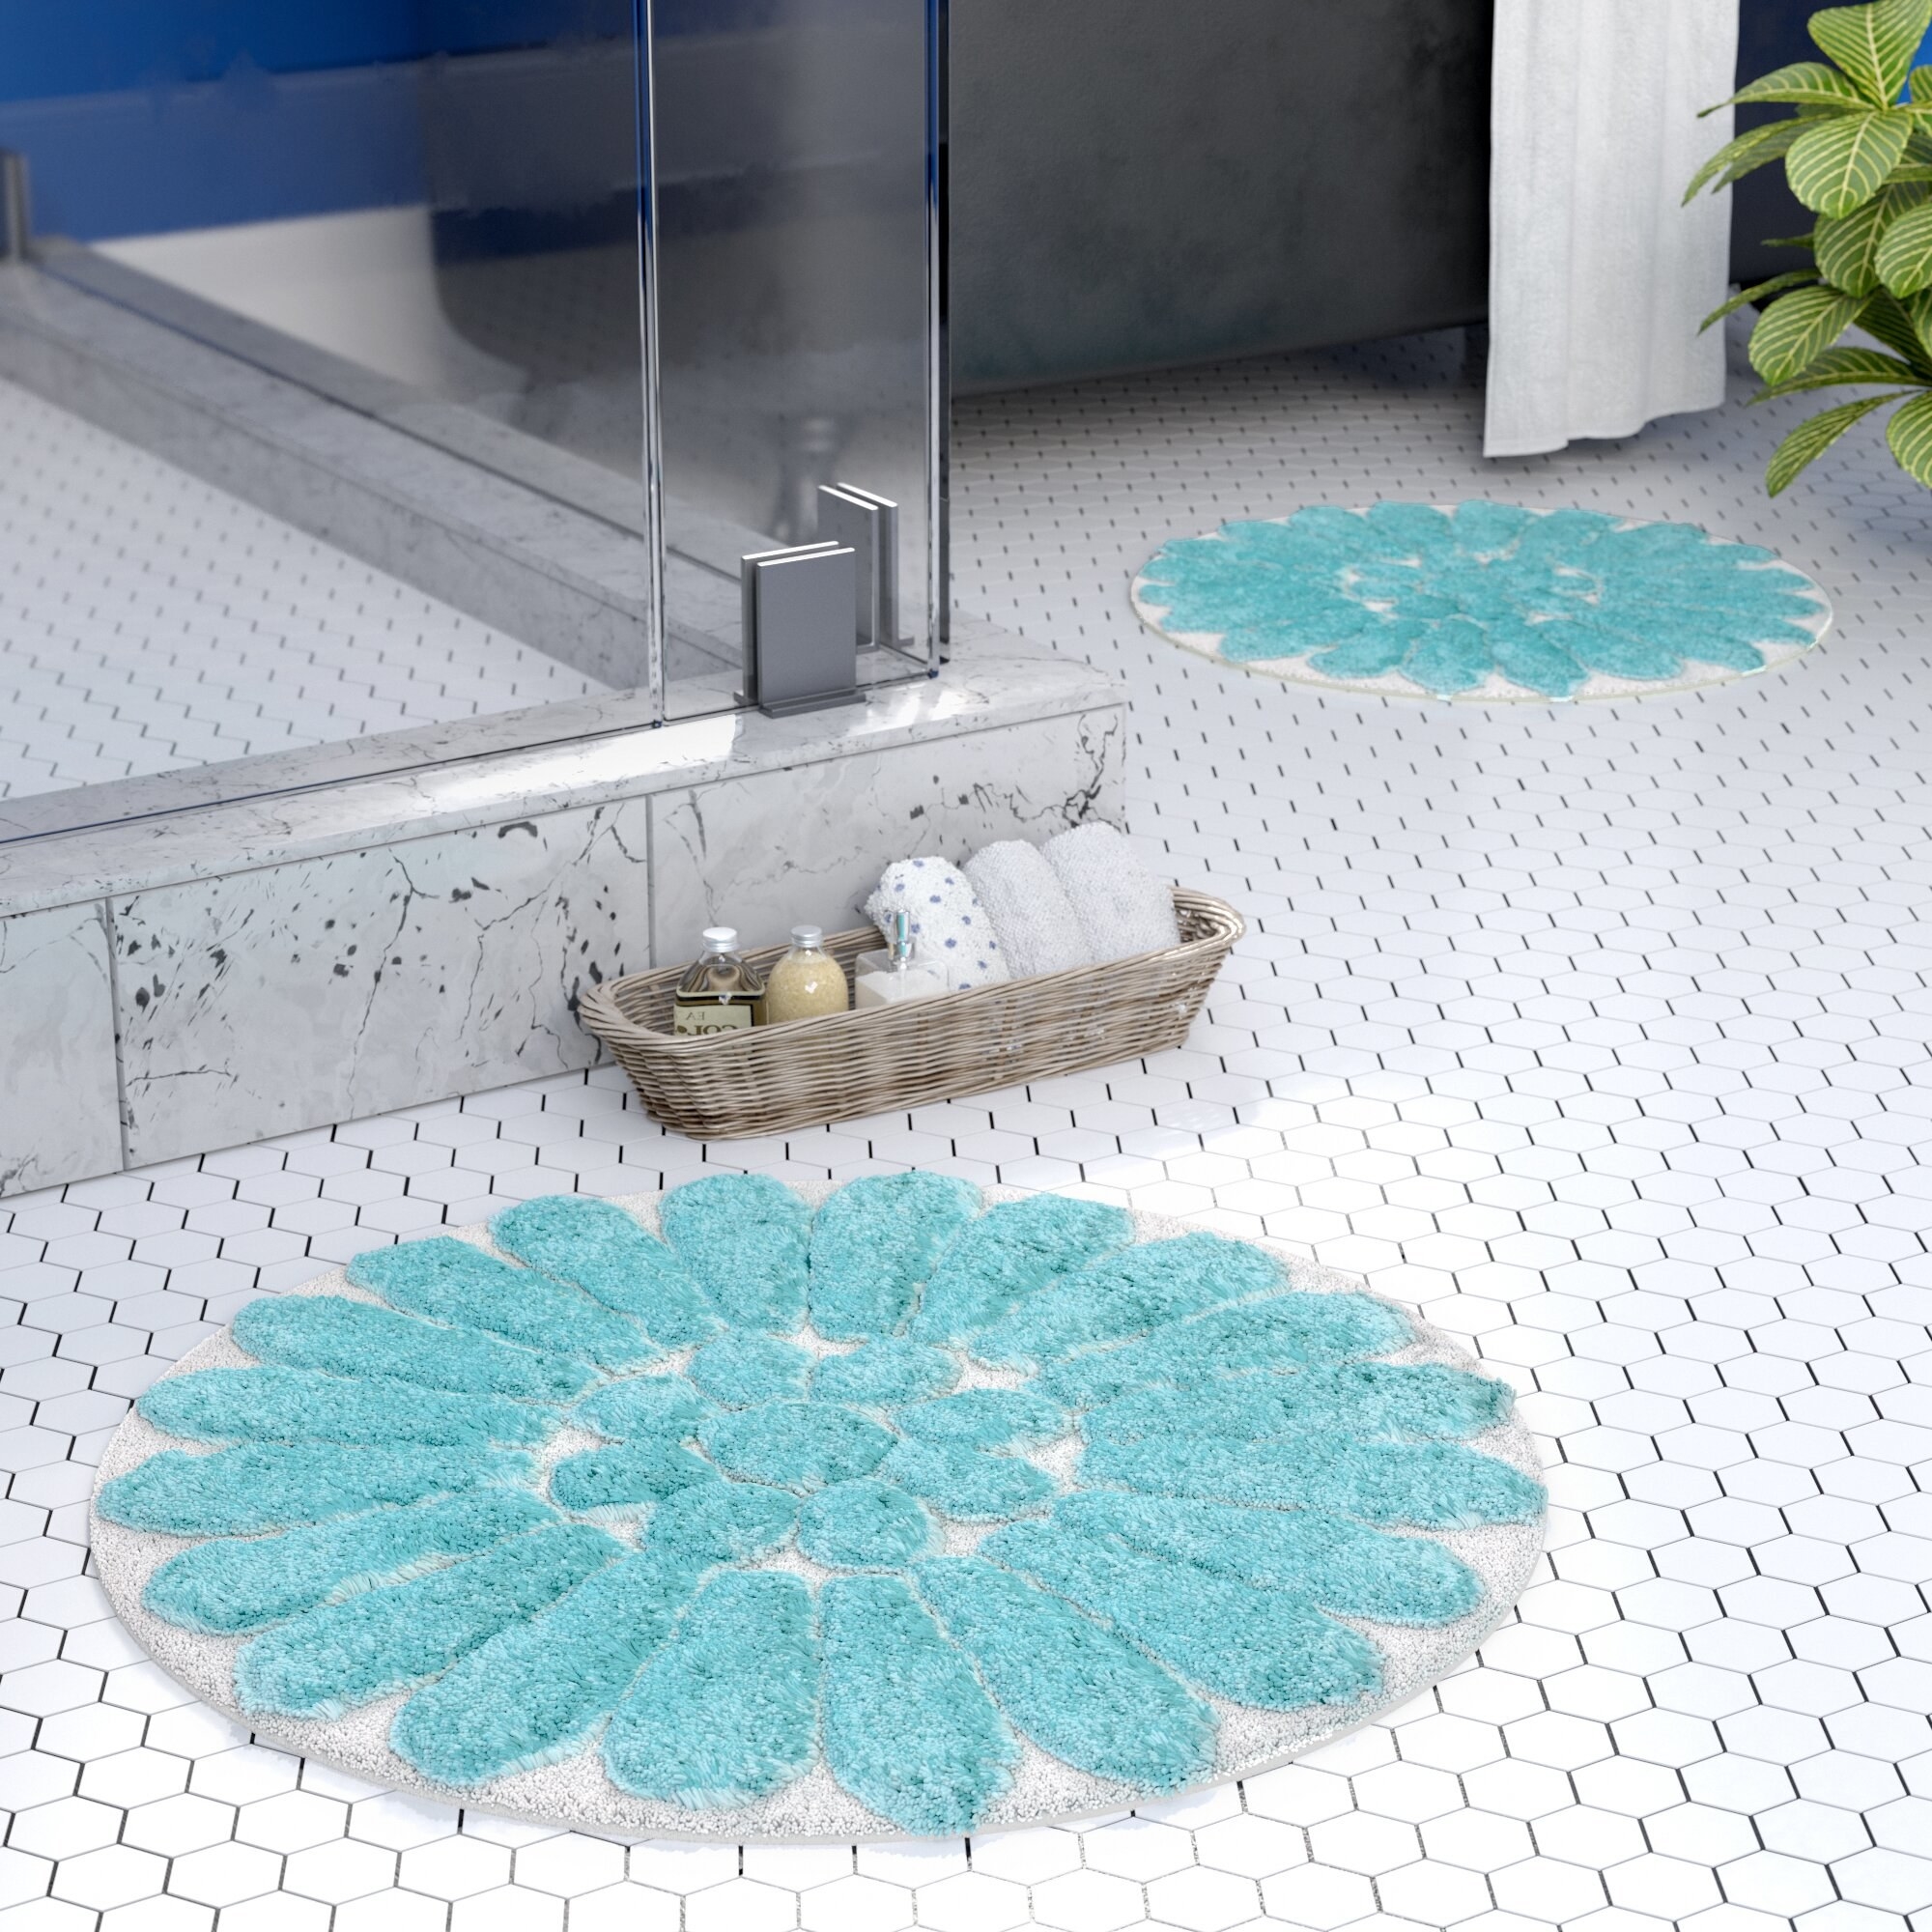 Two aqua flower rugs in a white tiled bathroom